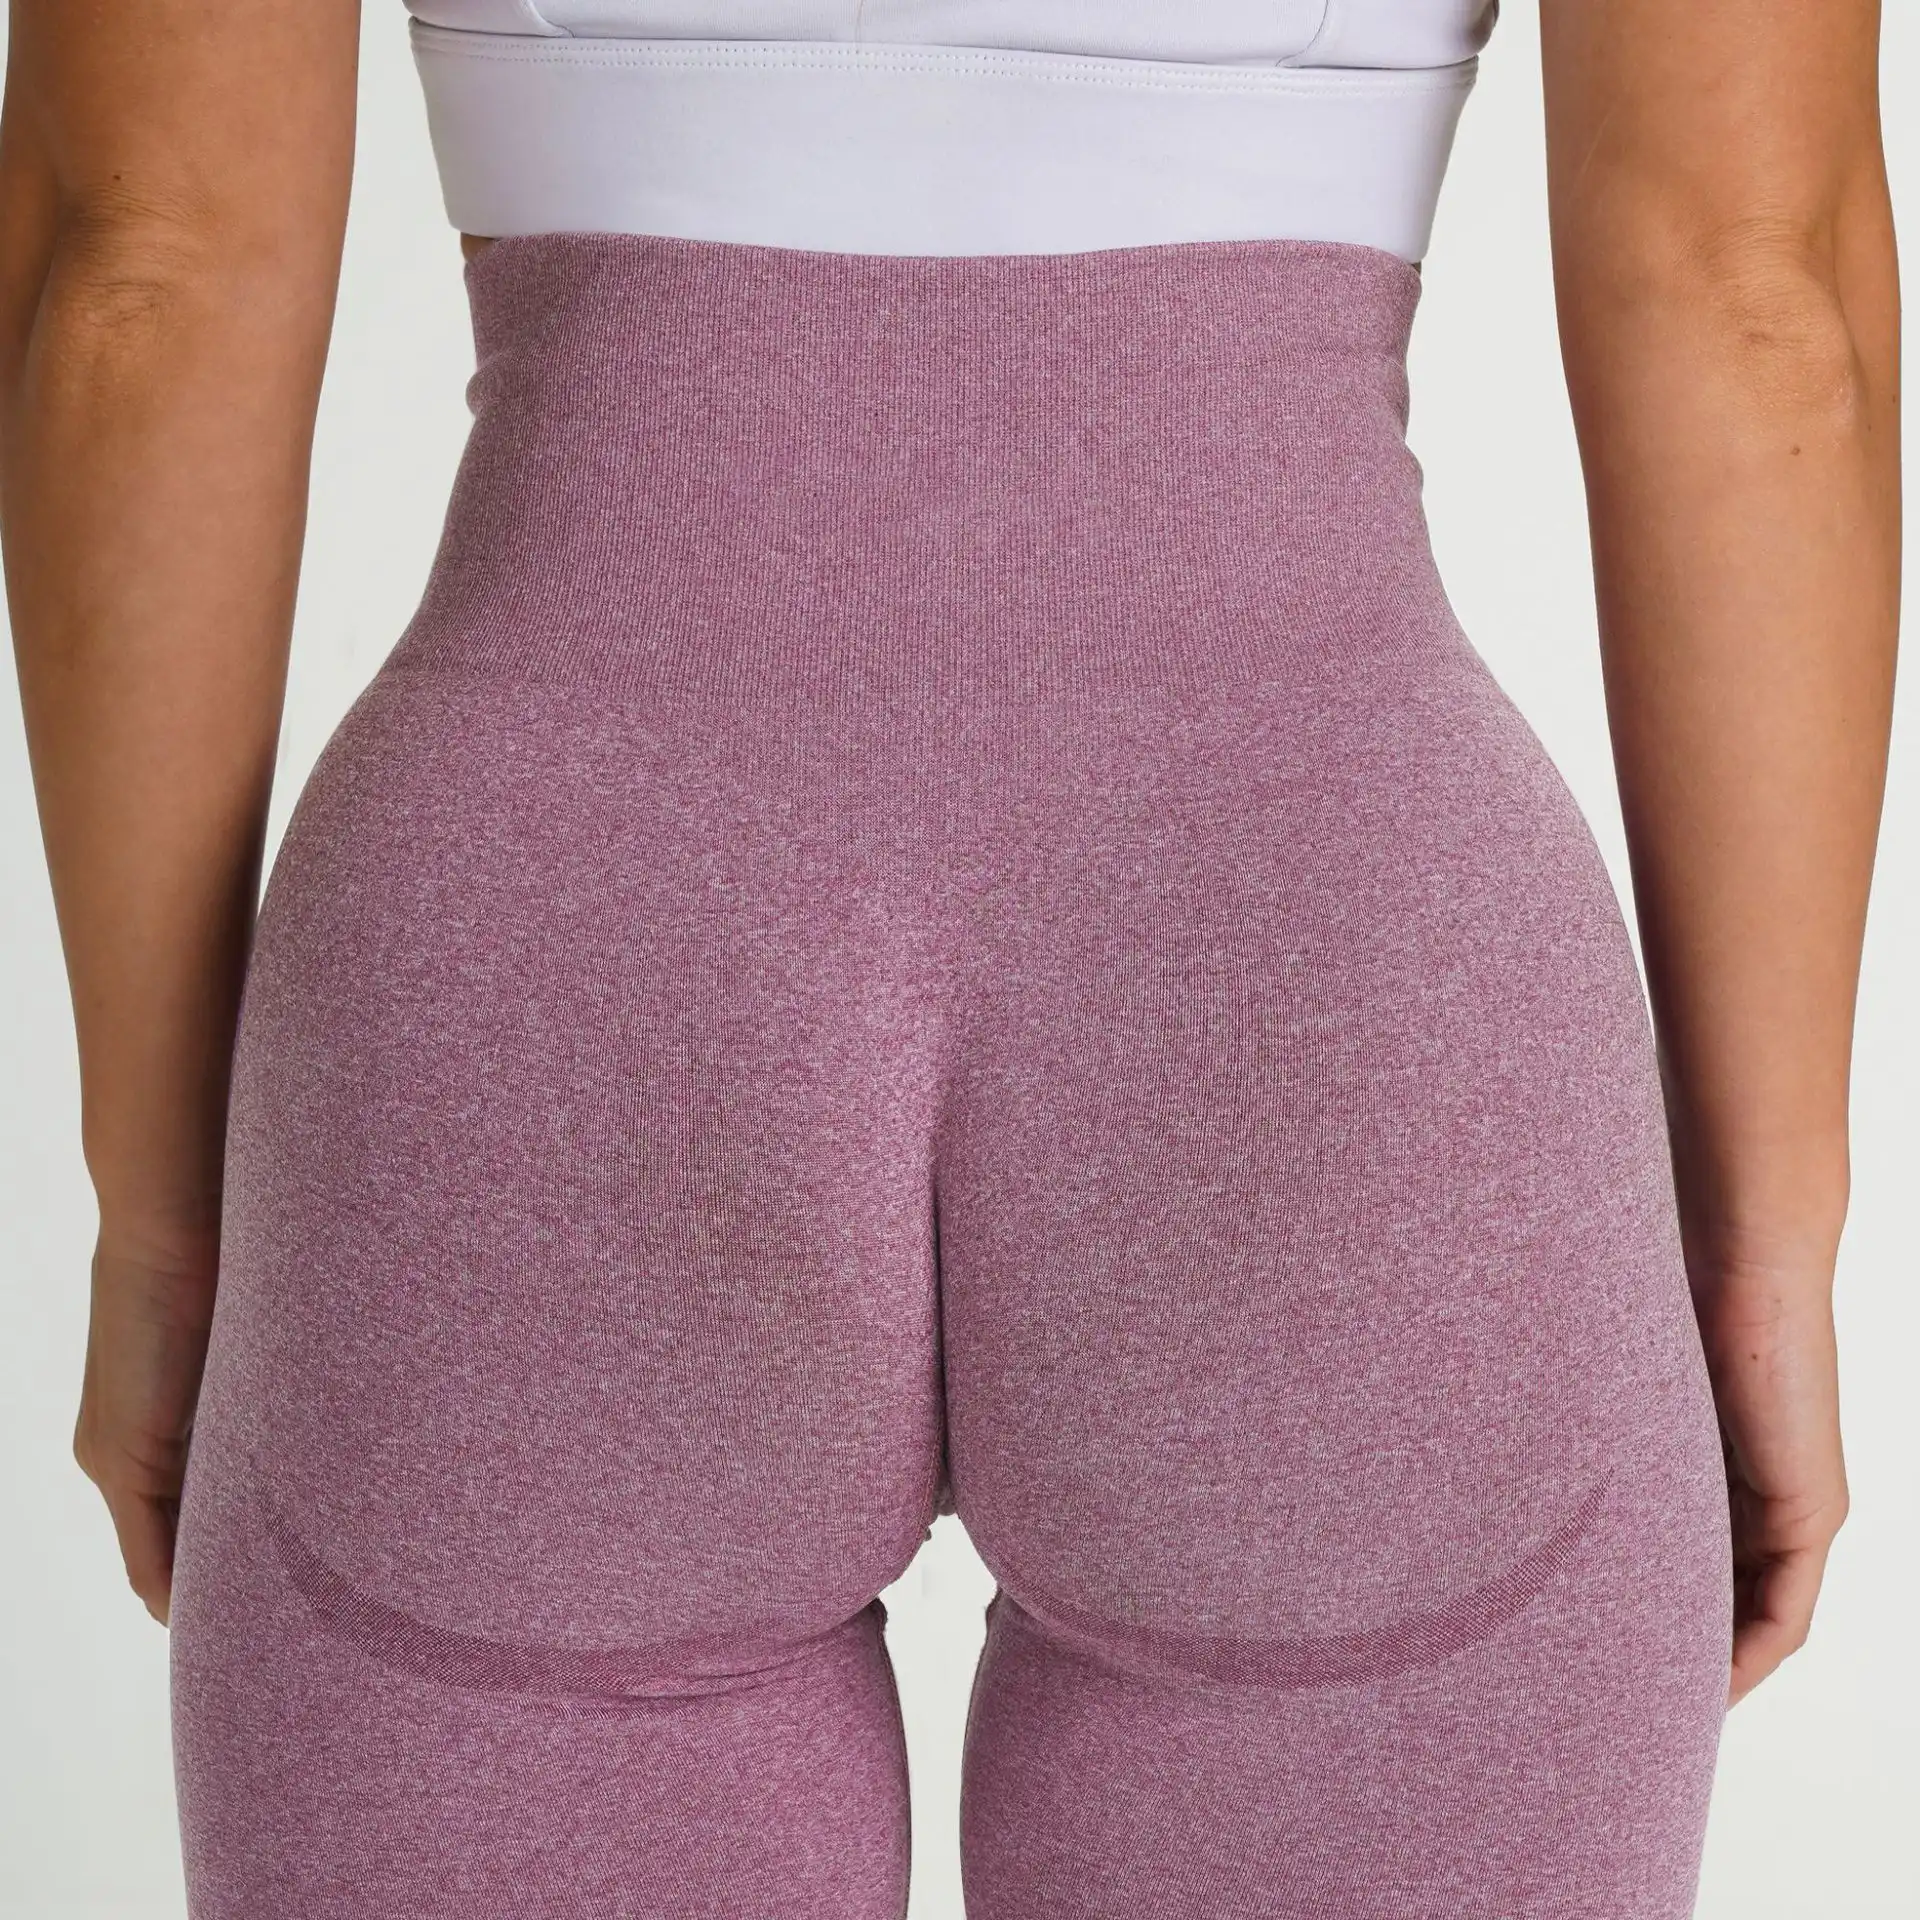 कस्टम फिटनेस कमर ट्रेनर पैंट कसरत चड्डी जिम कुचलना बट सहज योग महिला लेगिंग